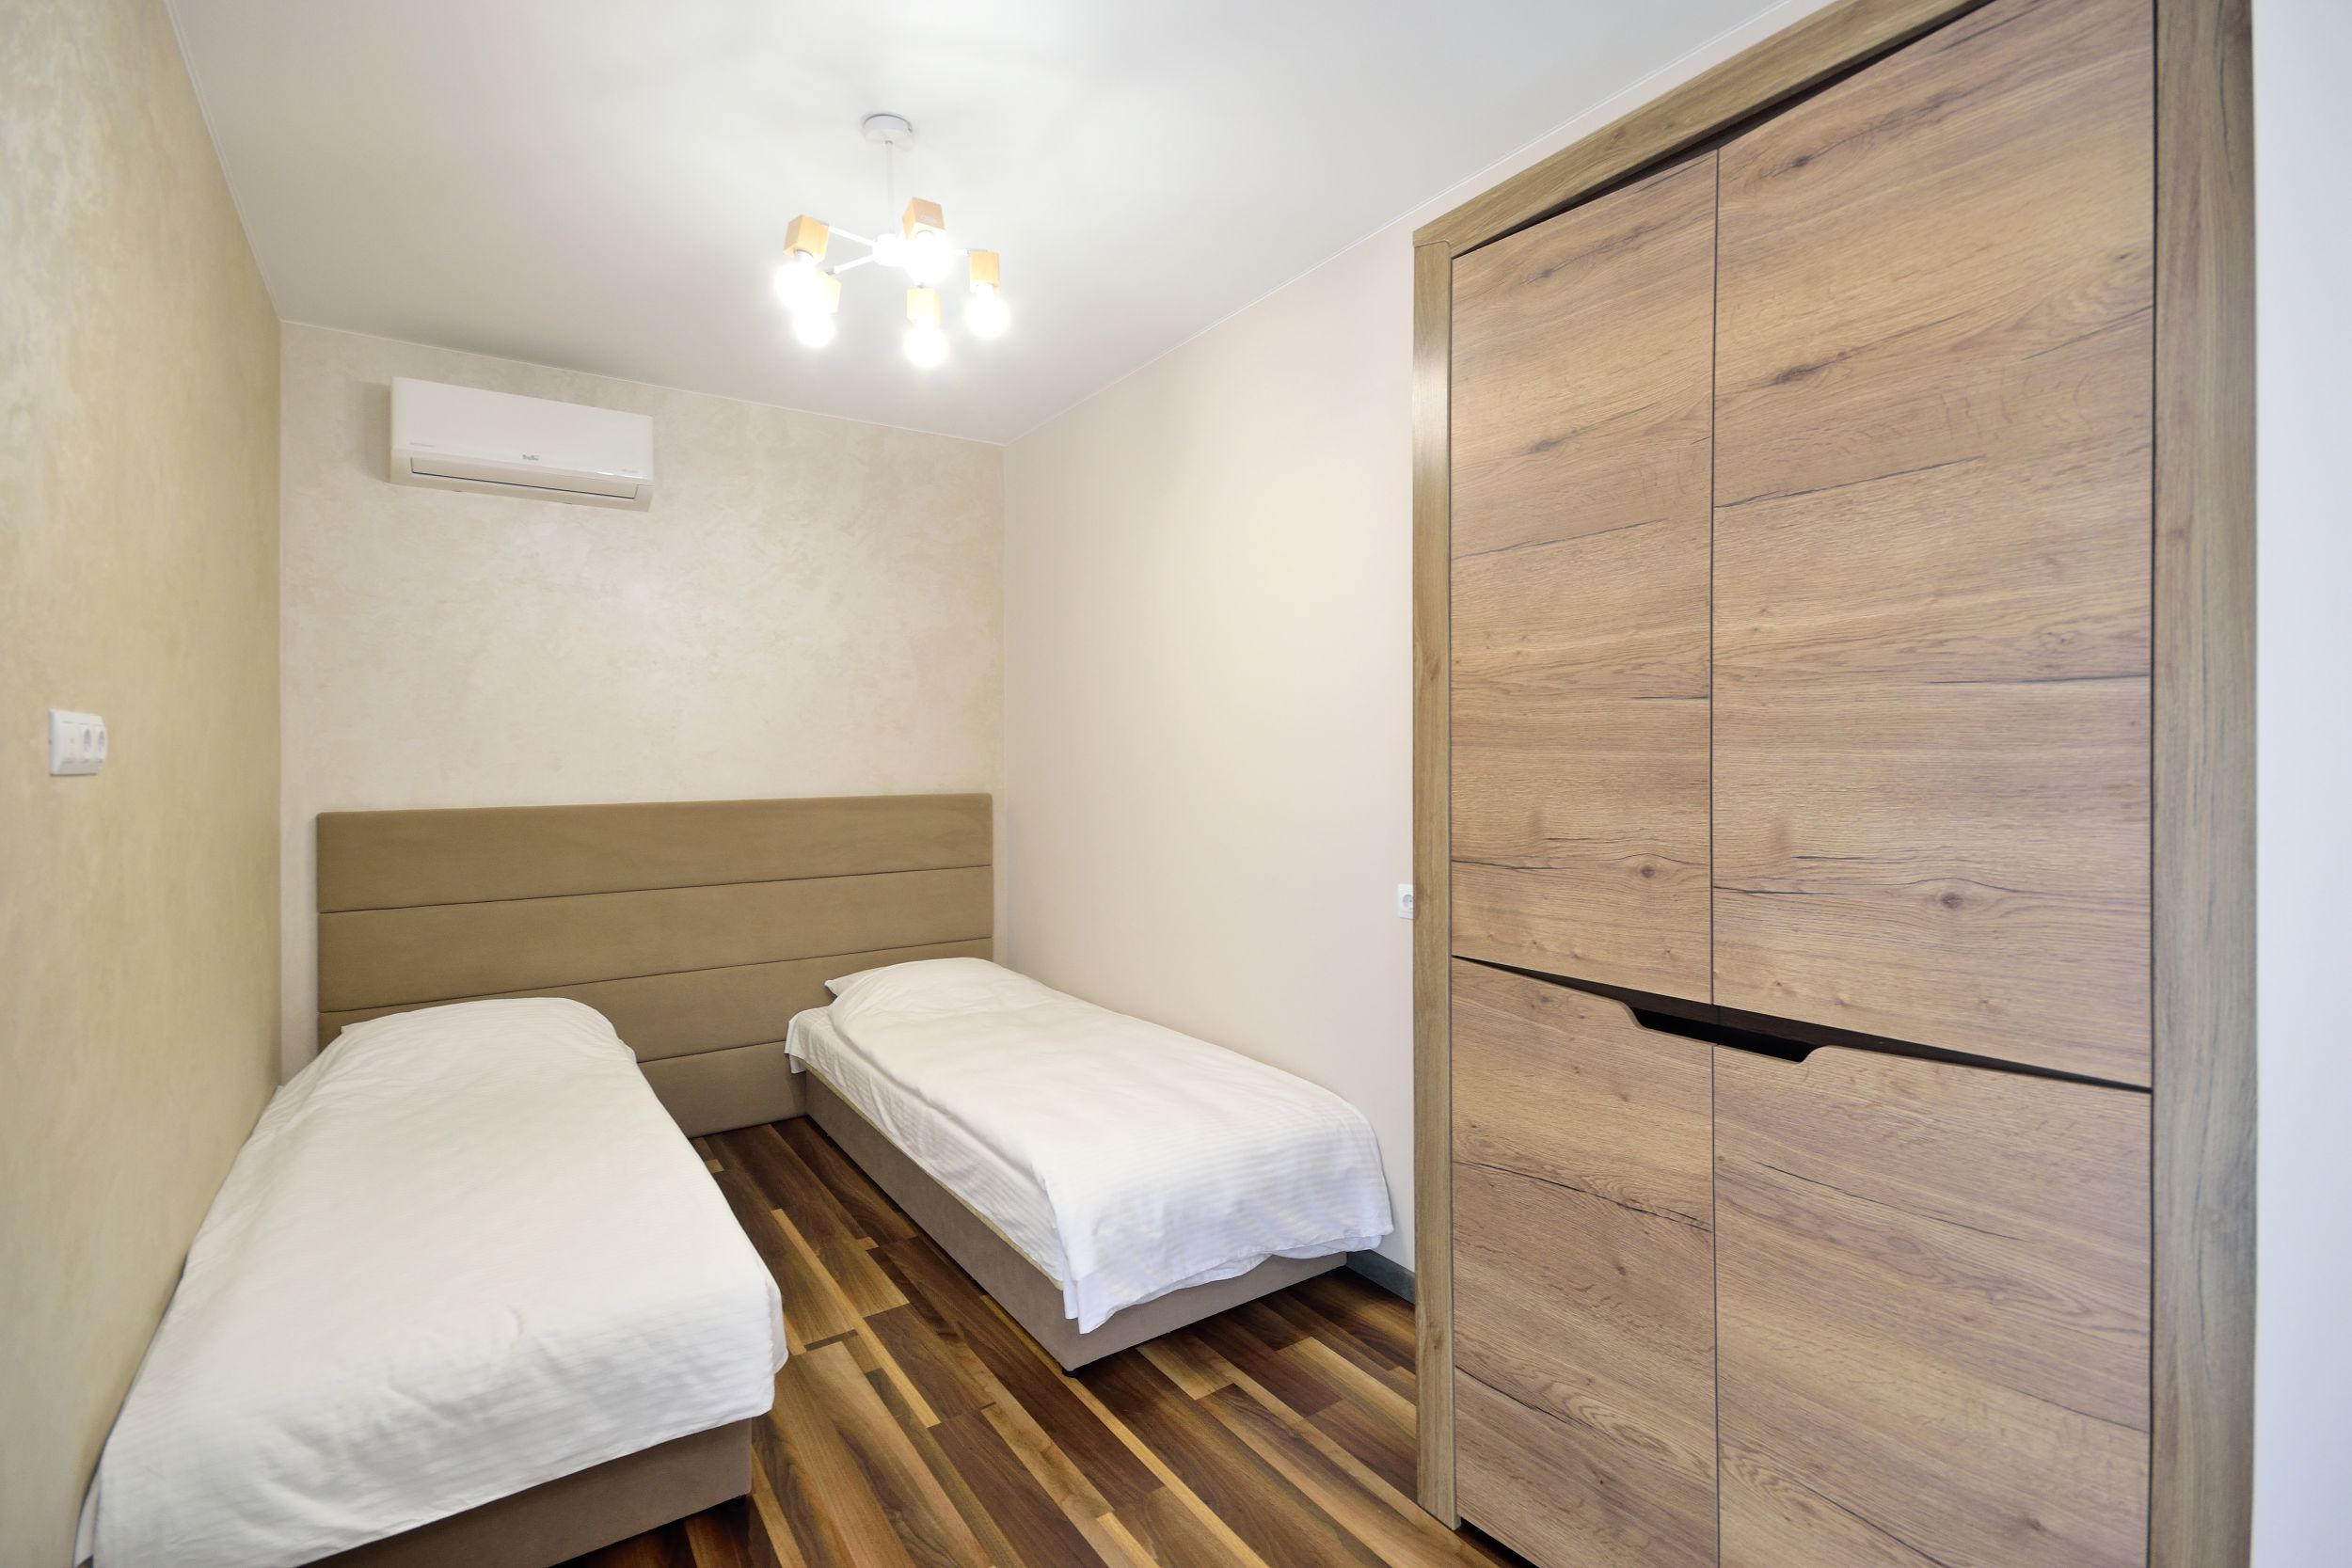 АК-2030_2. Аренда коттеджа на 2 спальни в Севастополе.